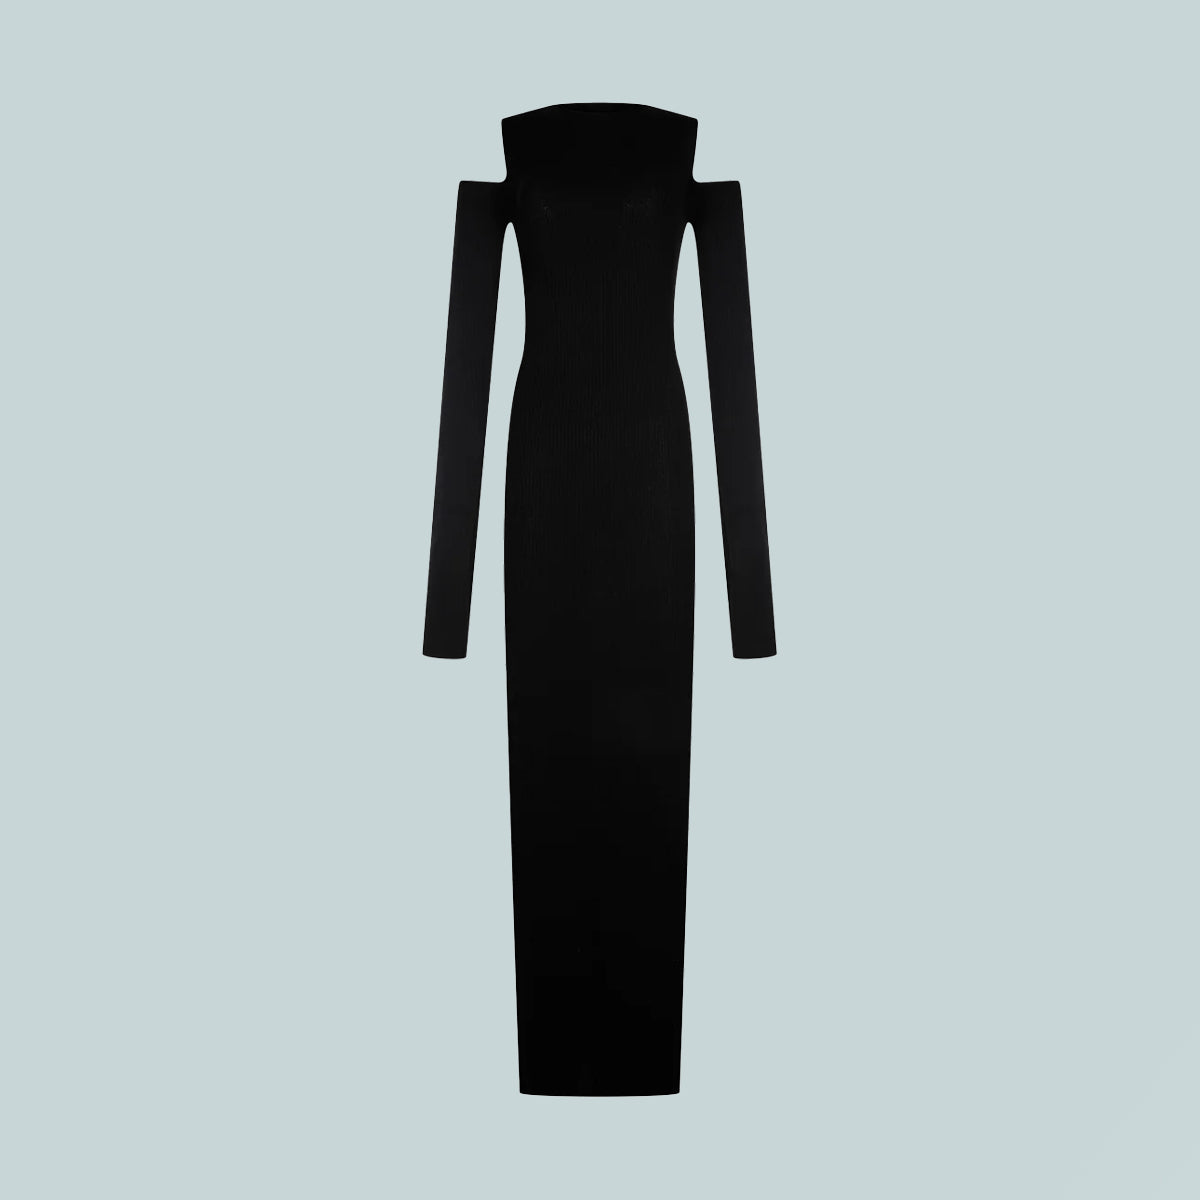 Cape Sleeve Dress Black